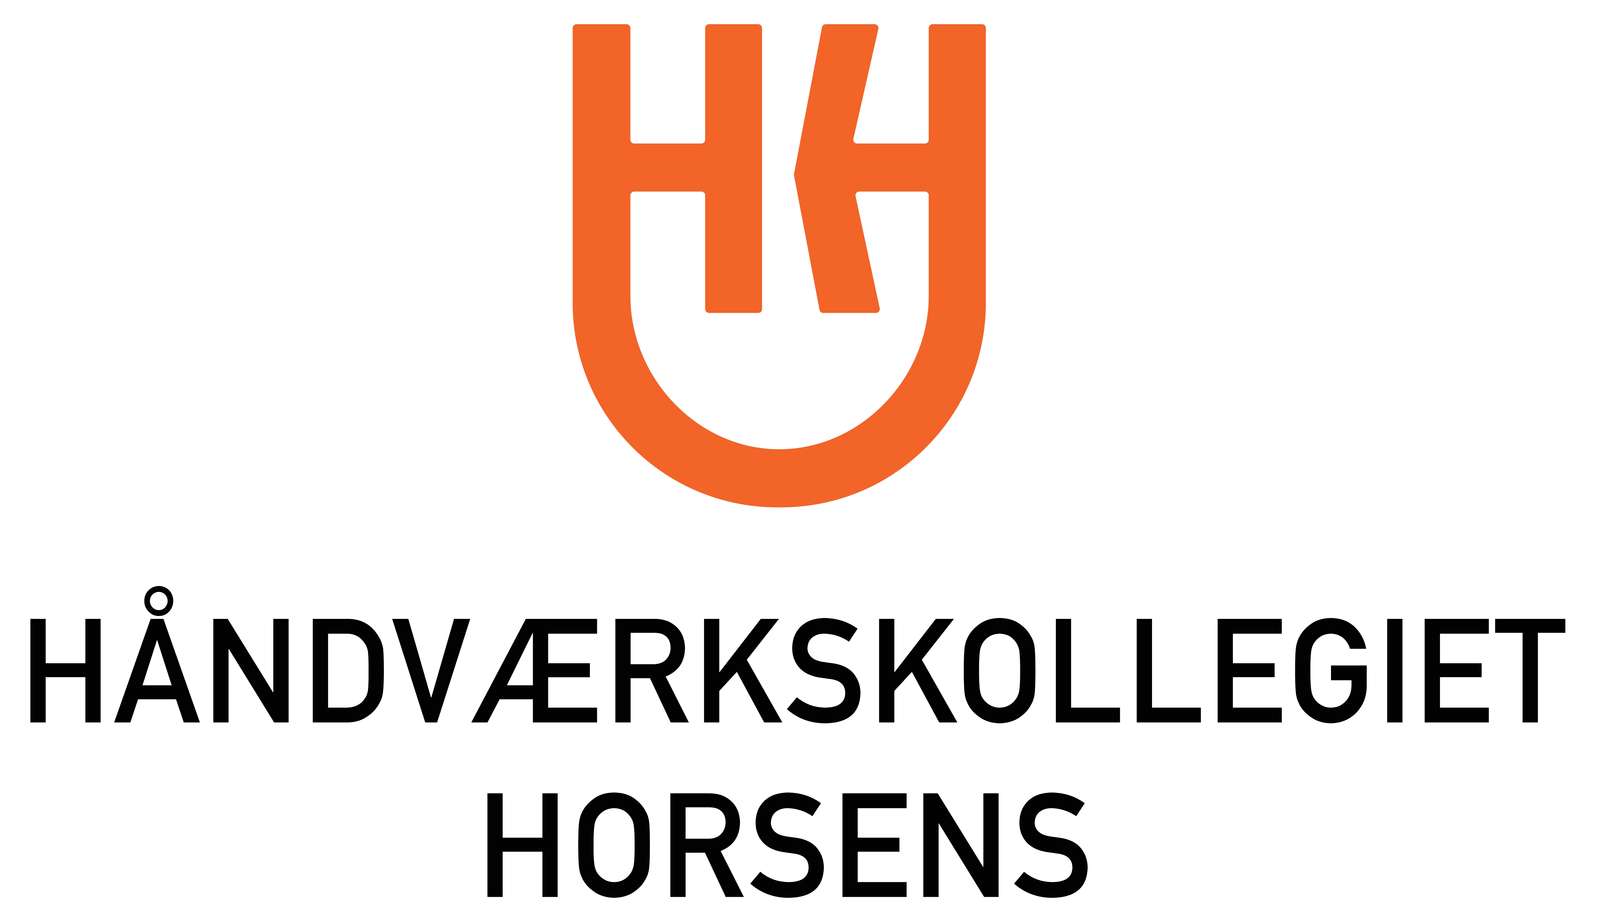 horsens_logo_vertical_orange_rgb